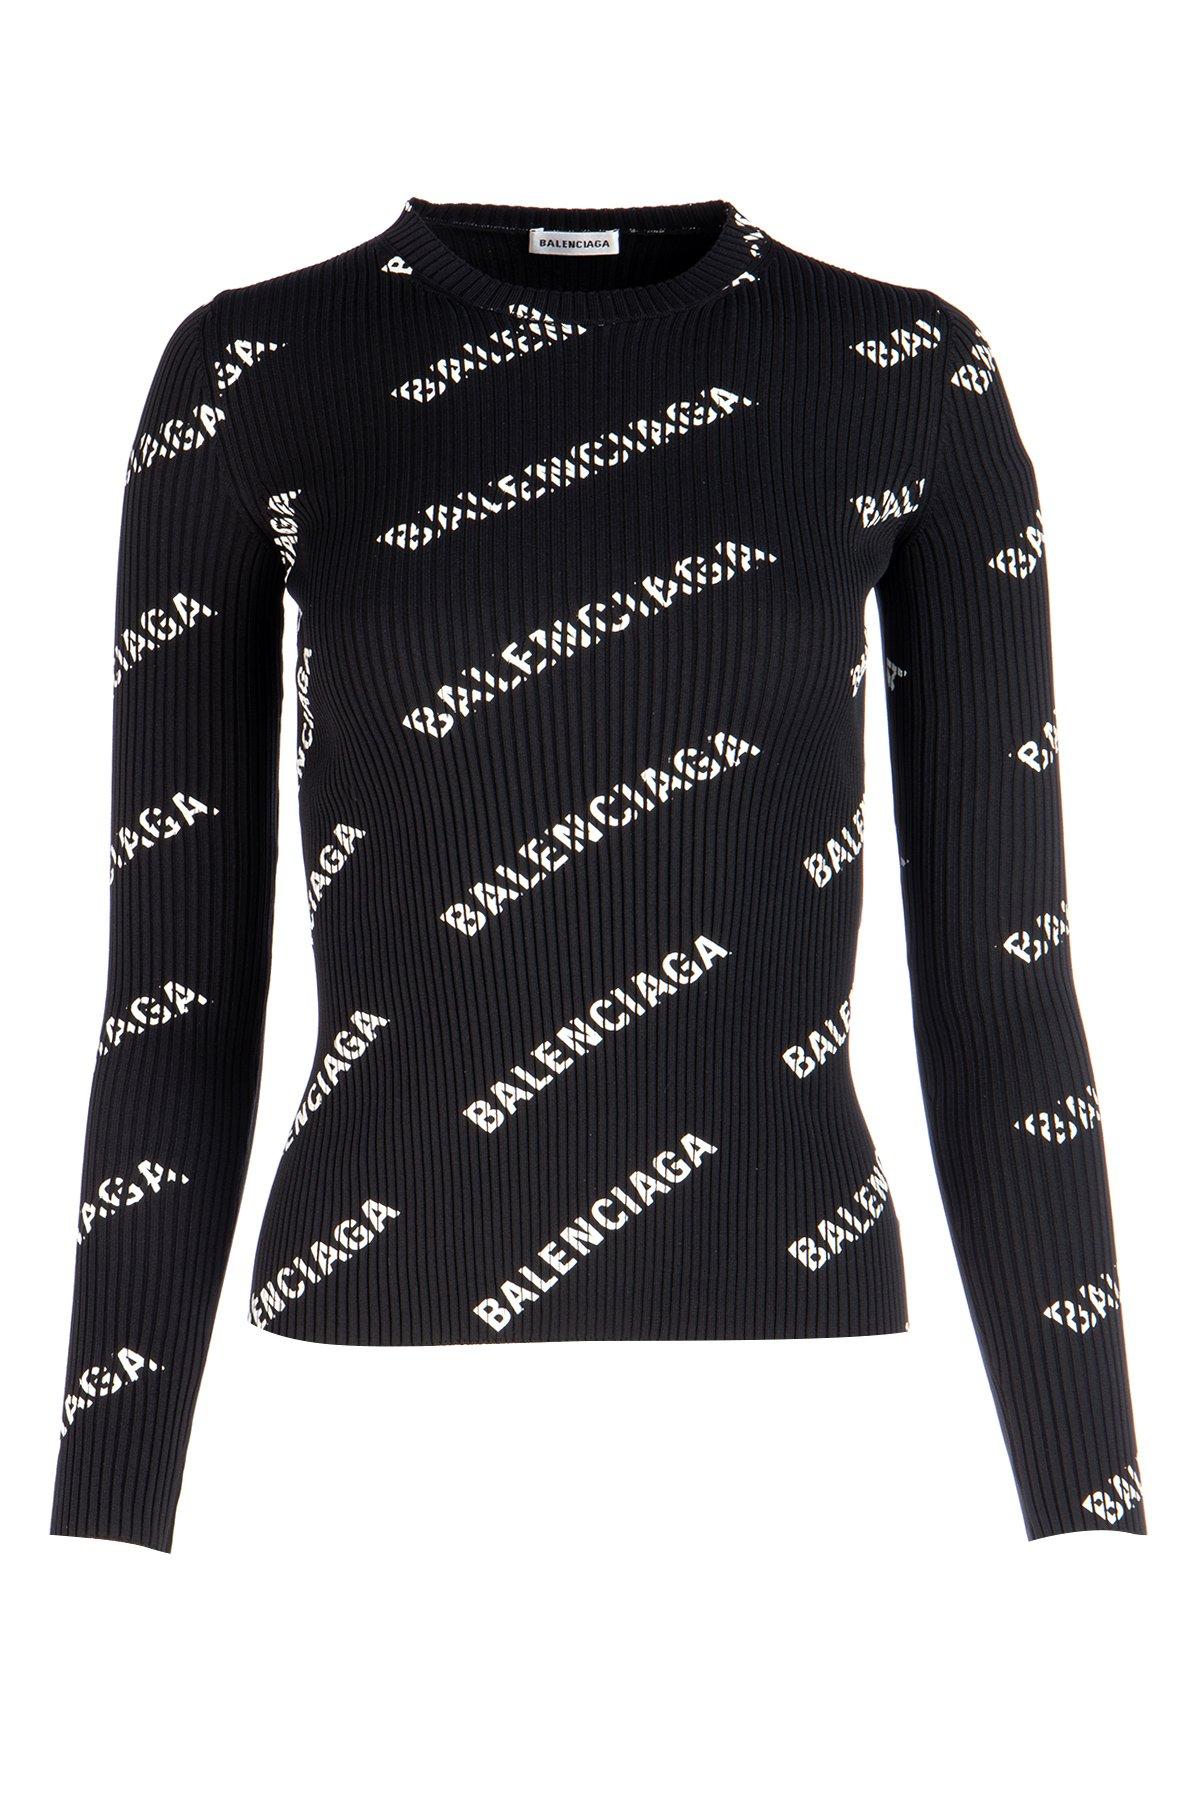 Balenciaga Synthetic All Over Logo Long-sleeve Top in Black - Lyst